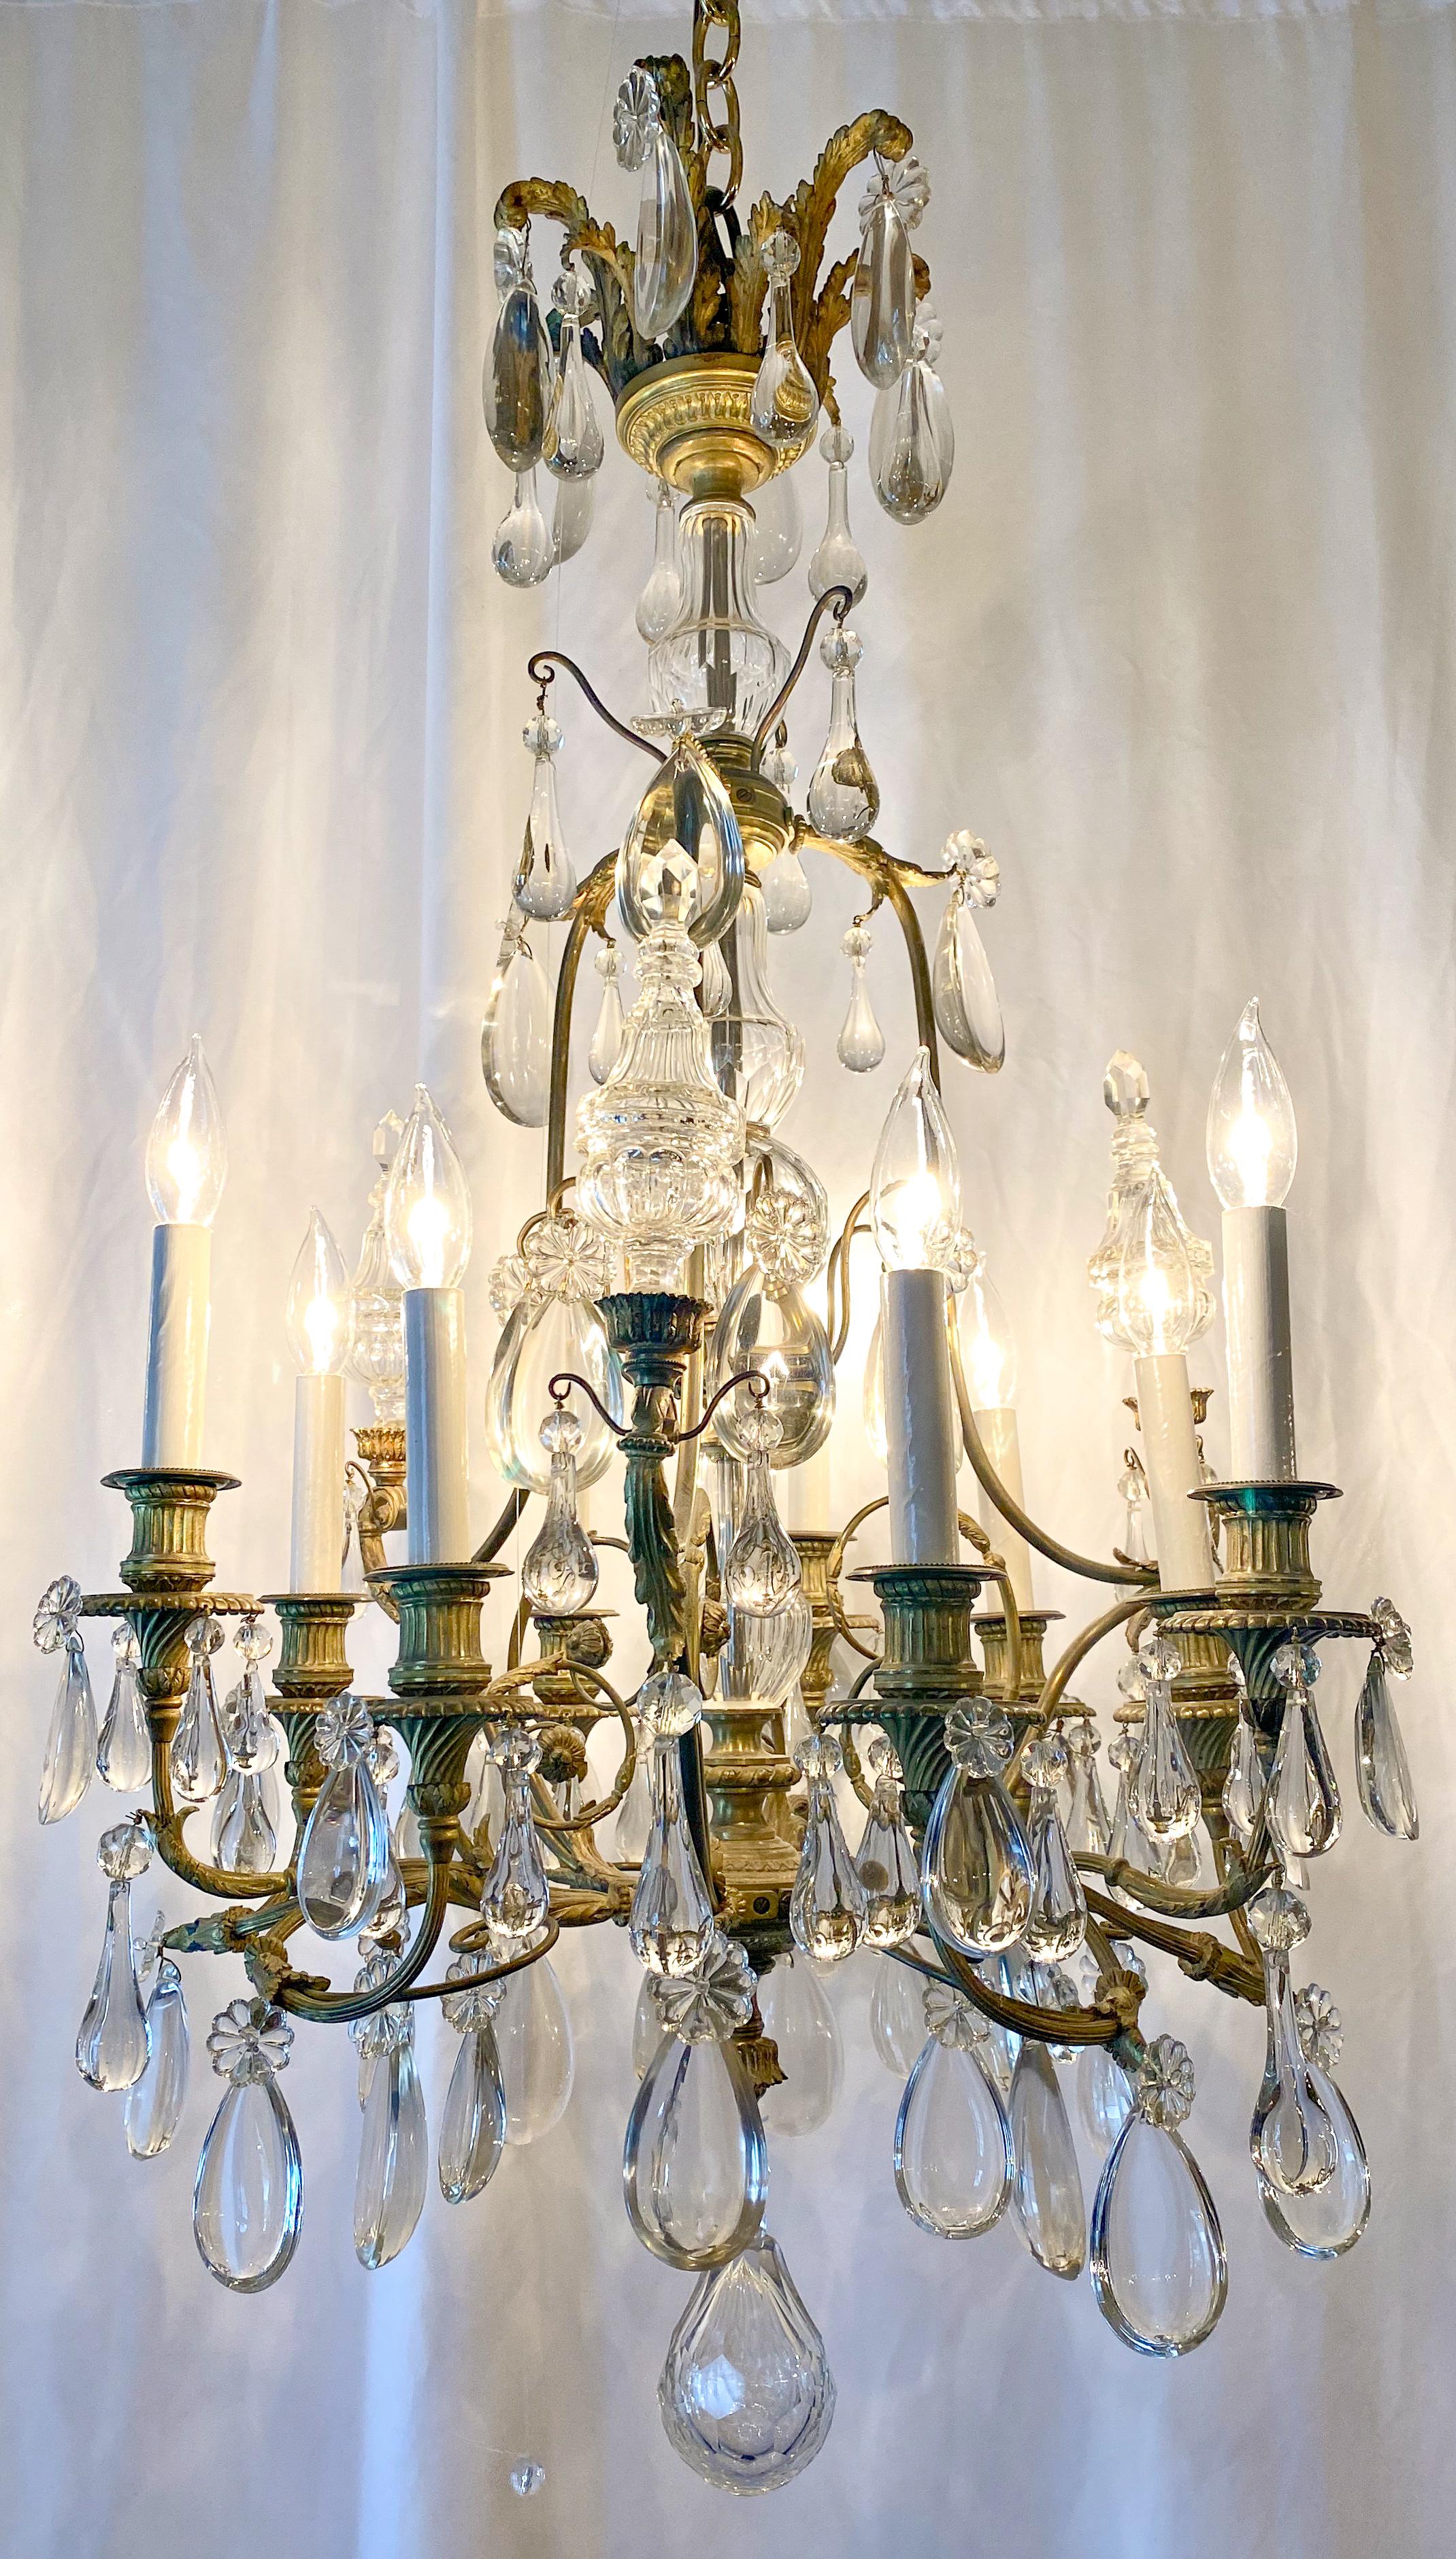 Antique French bronze crystal chandelier, circa 1880-1890.